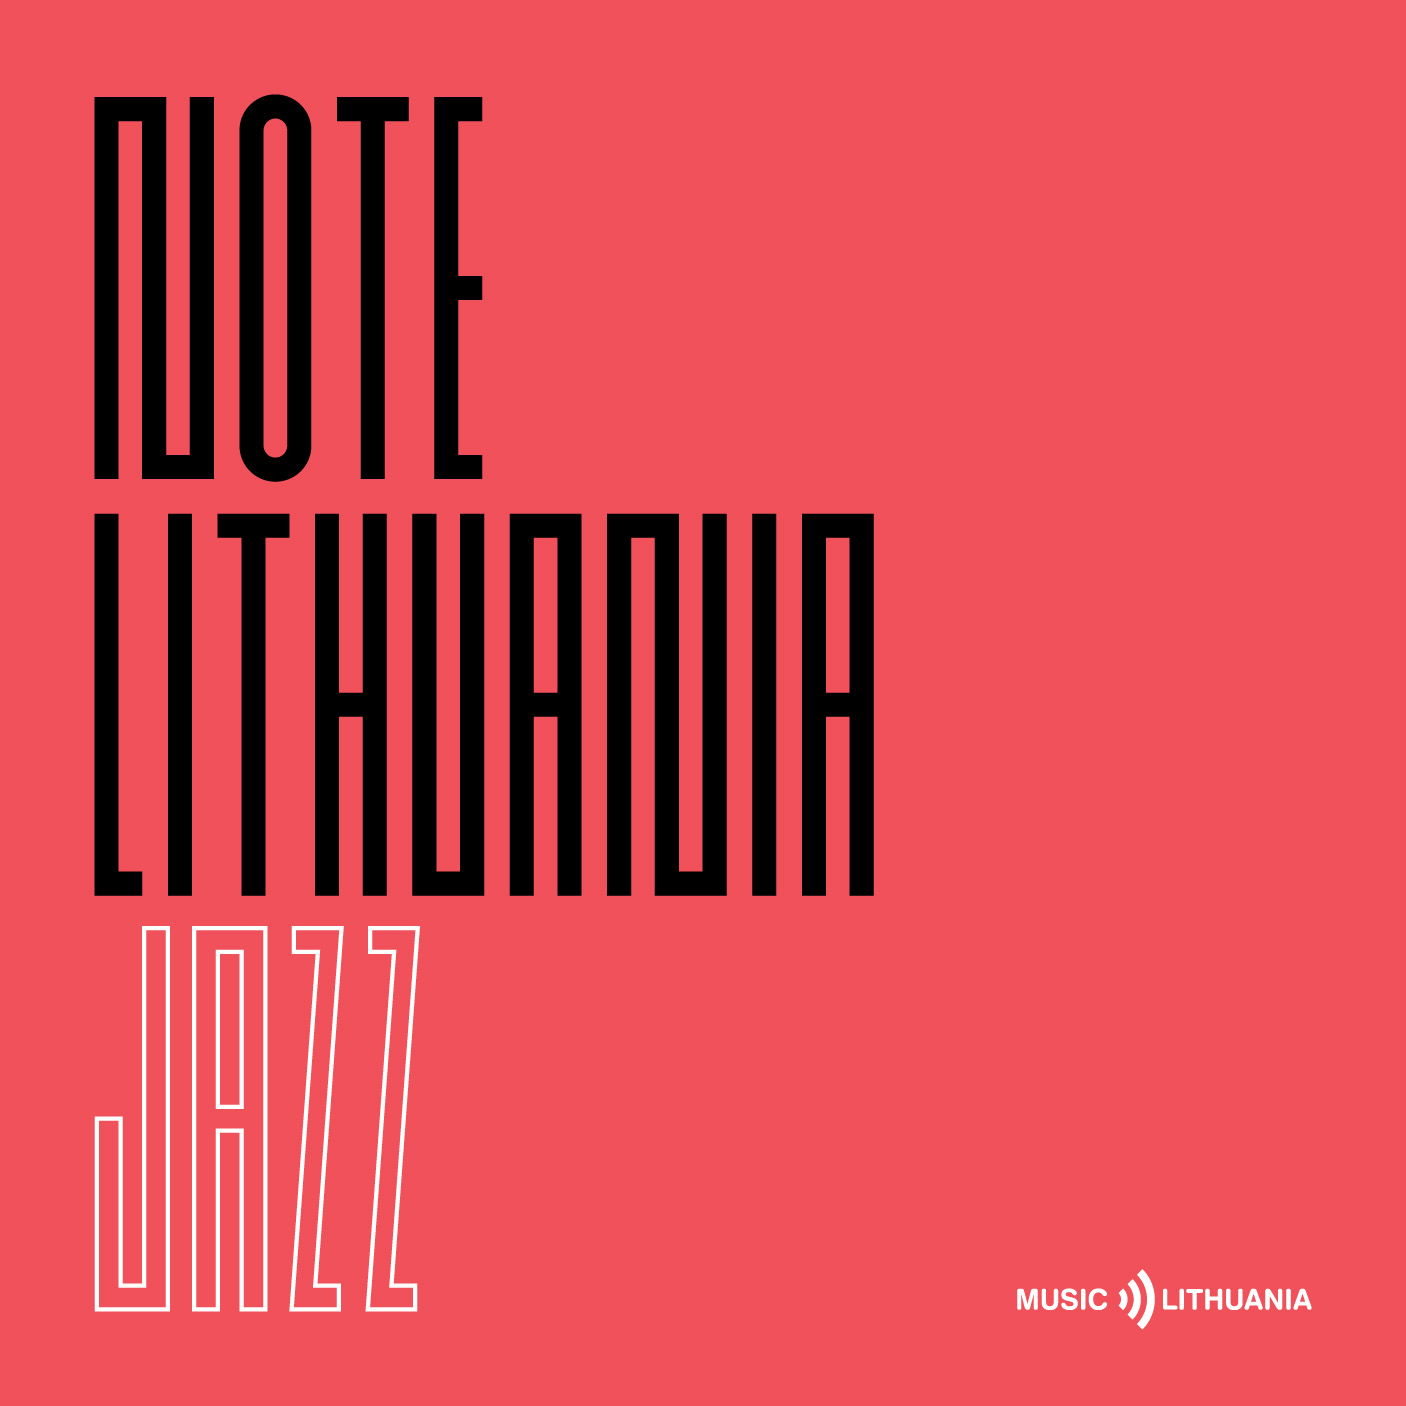 Note Lithuania Jazz 2016.jpg